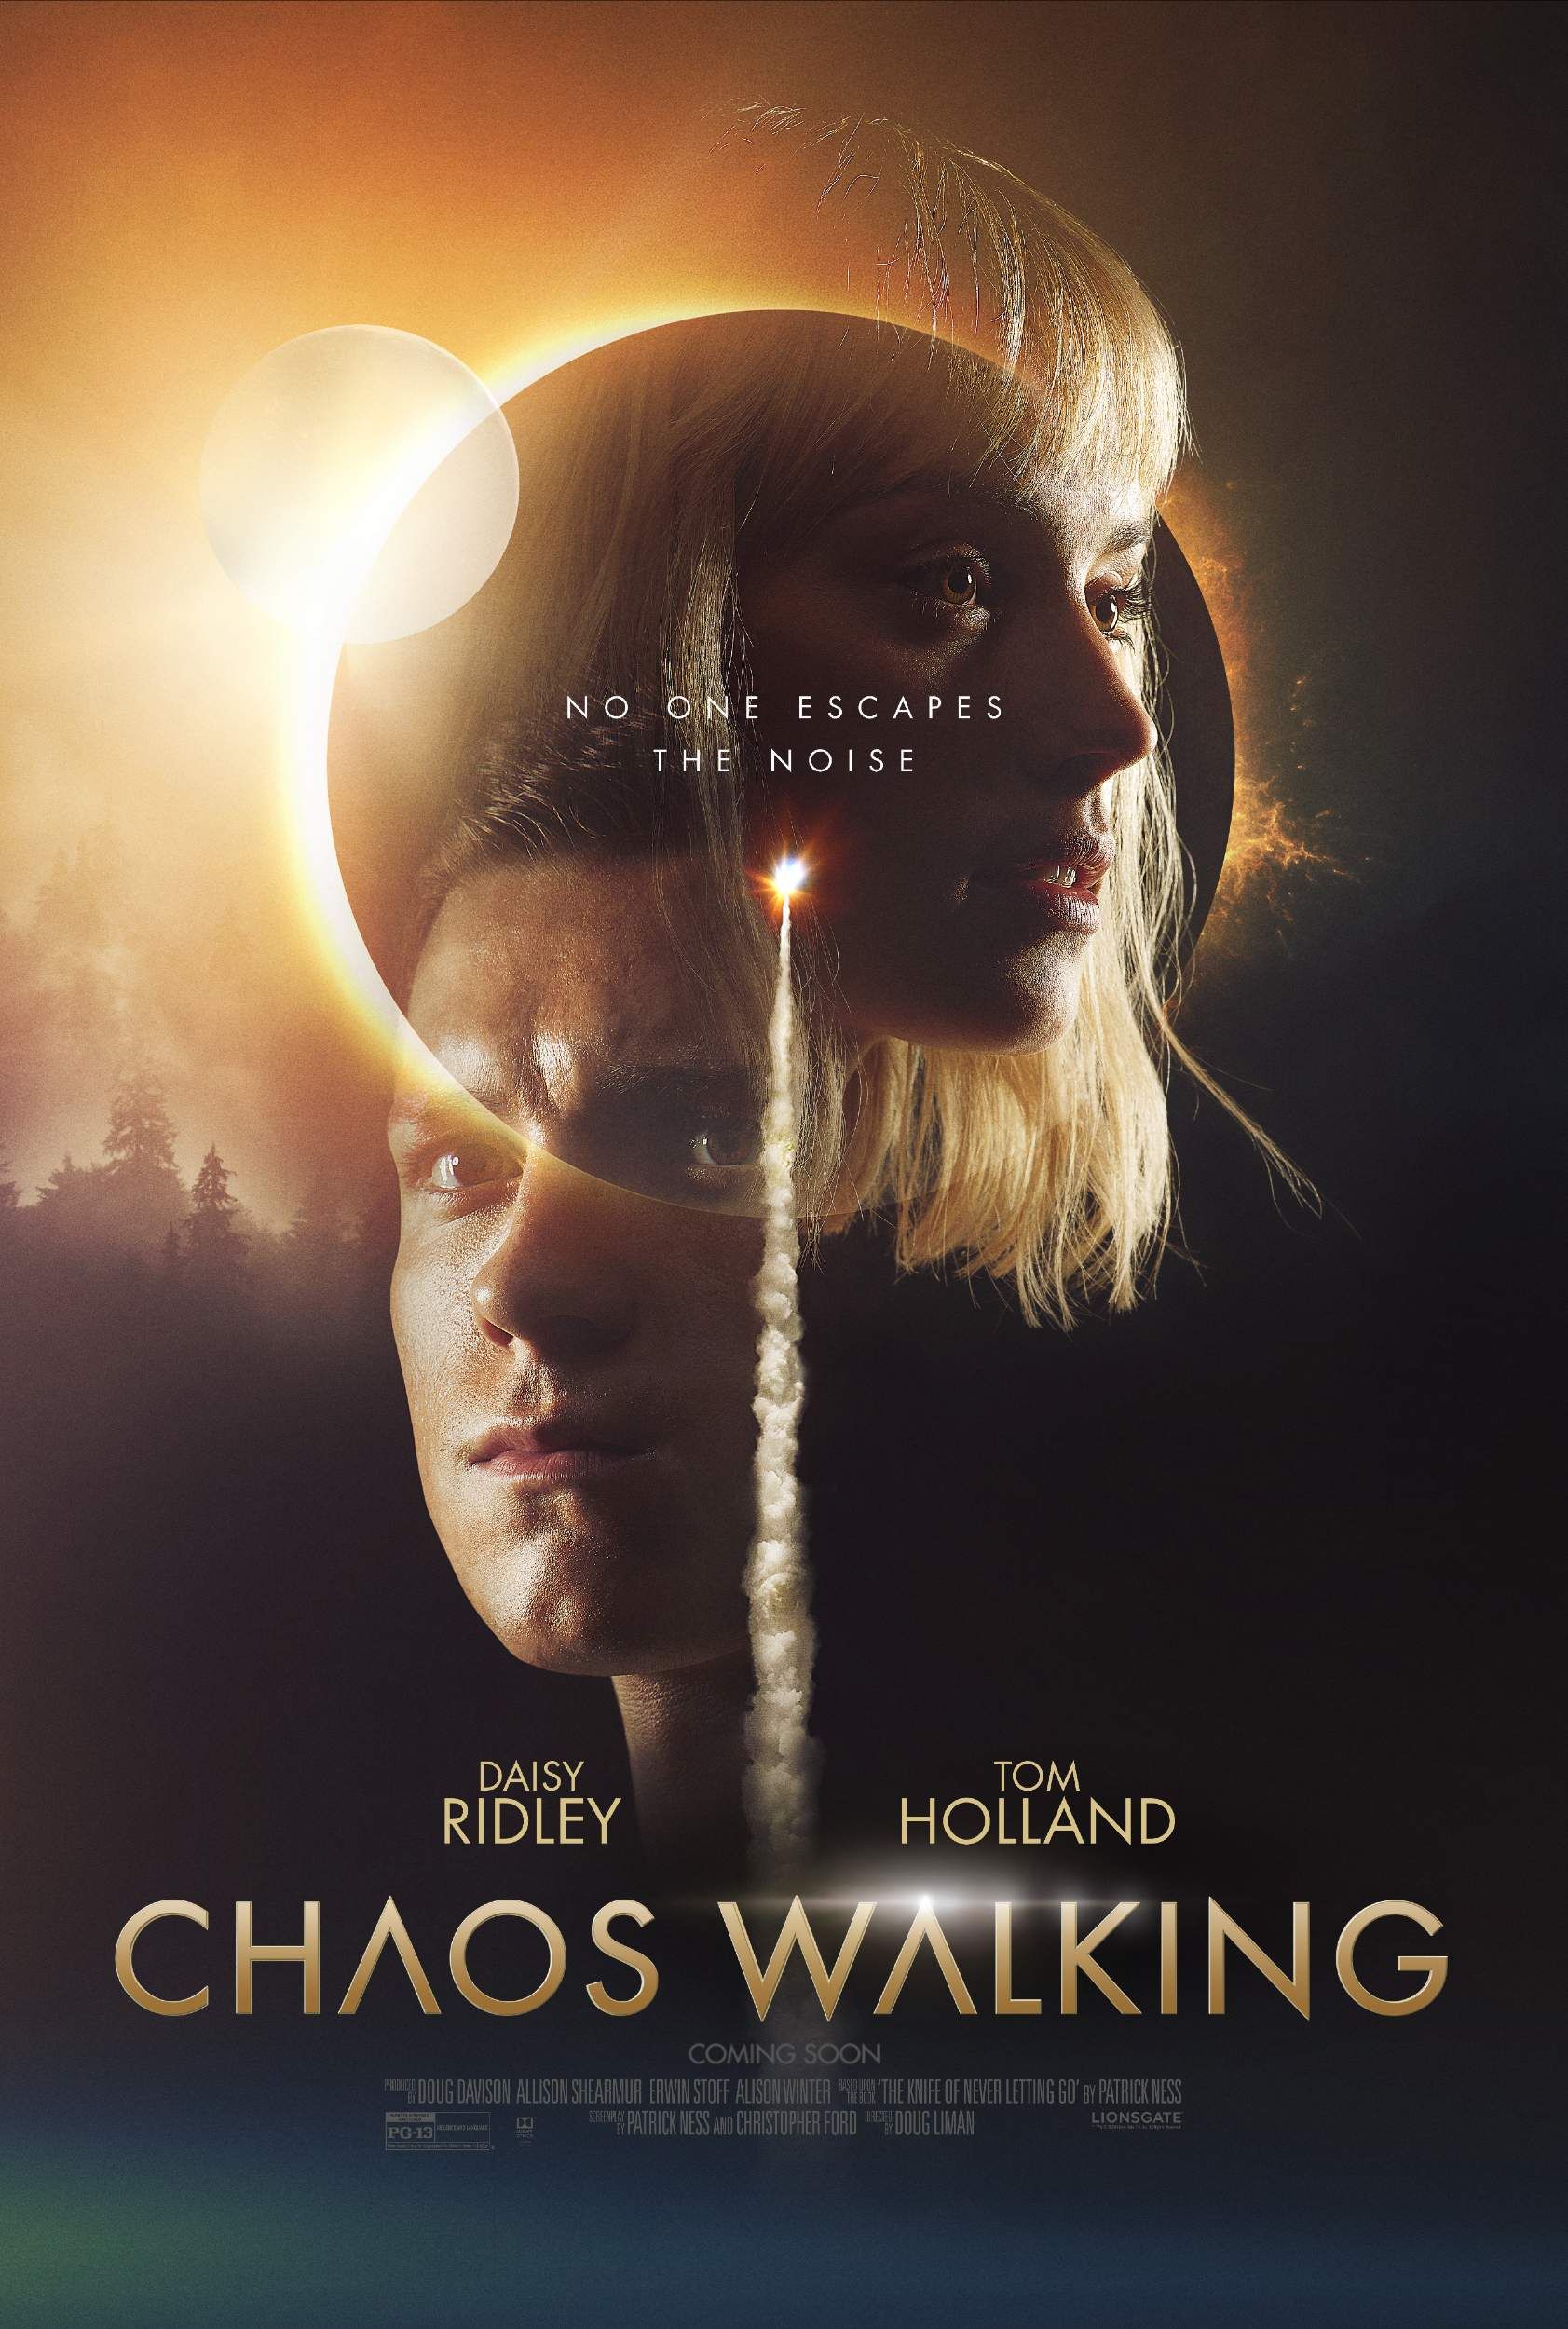 Chaos Walking Movie Posters Spotlight Tom Holland & Daisy Ridley